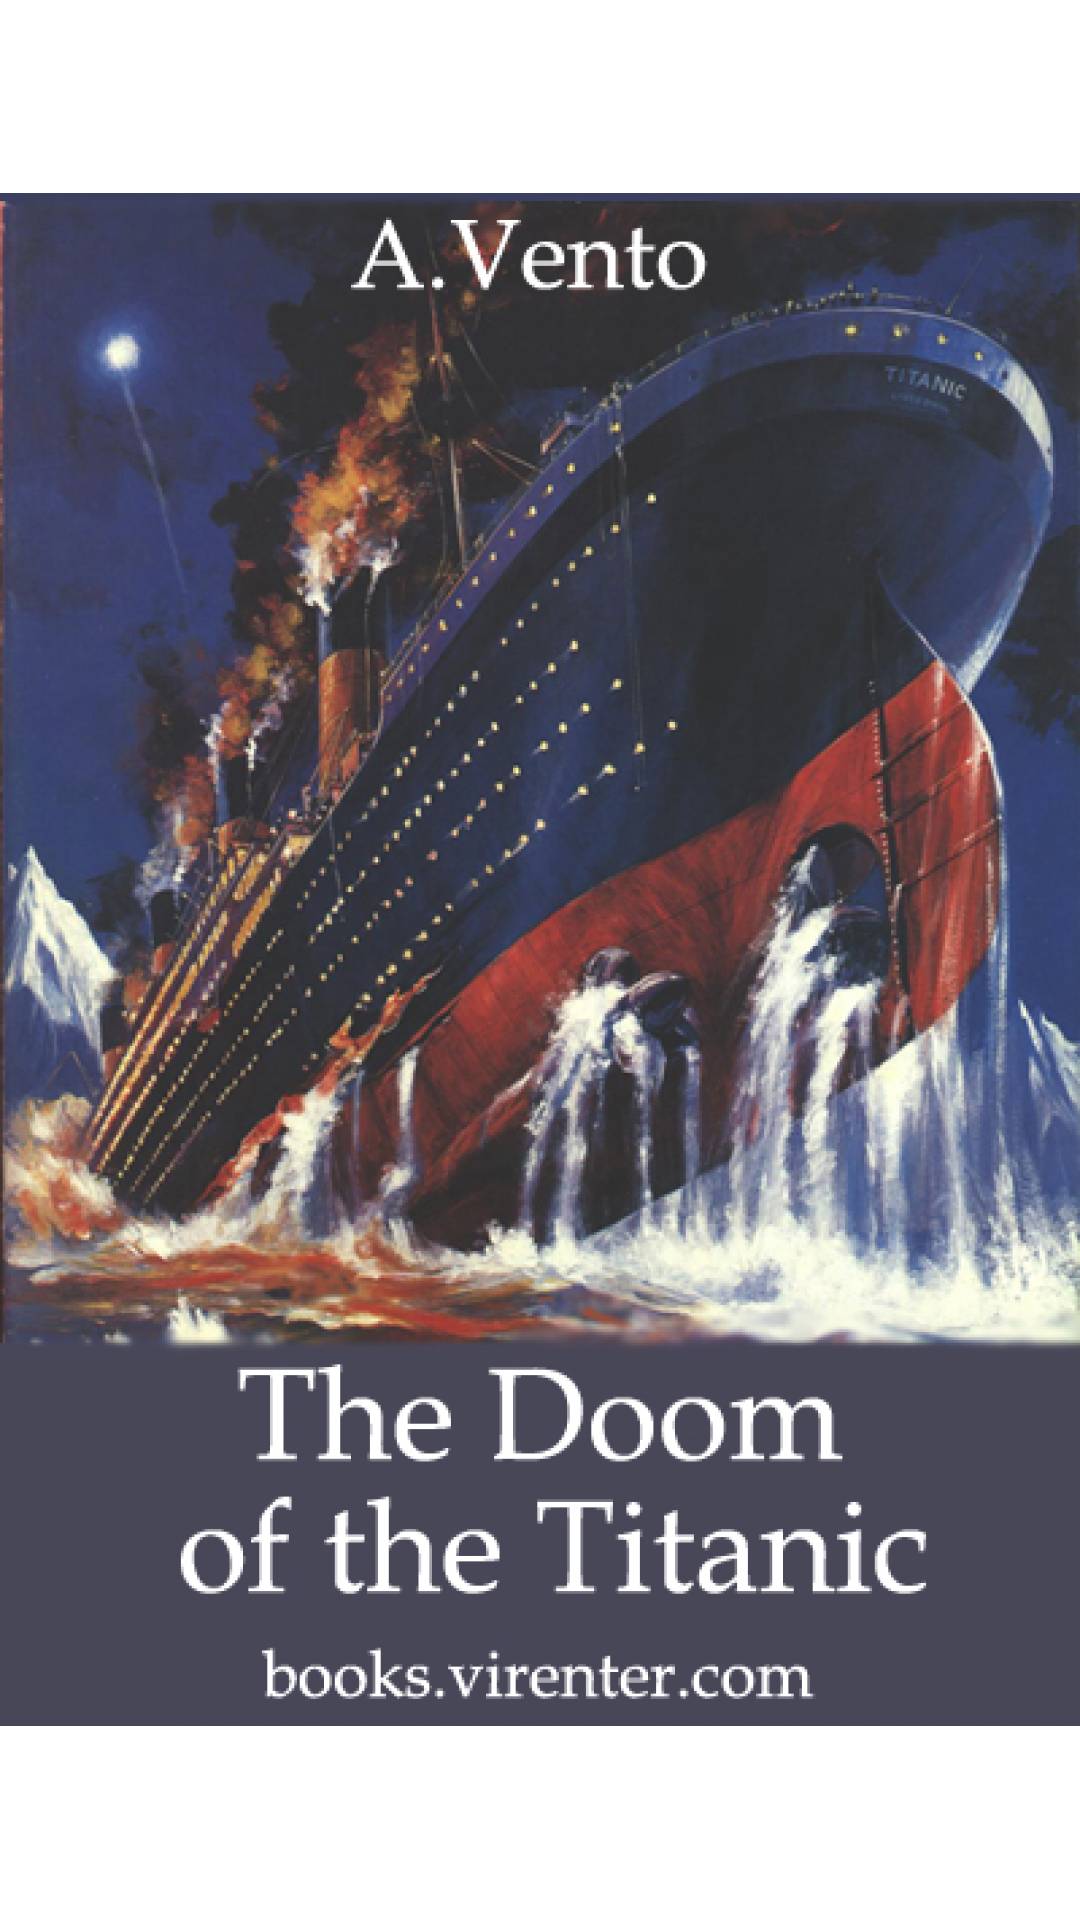 A.Vento - The Doom of the Titanic